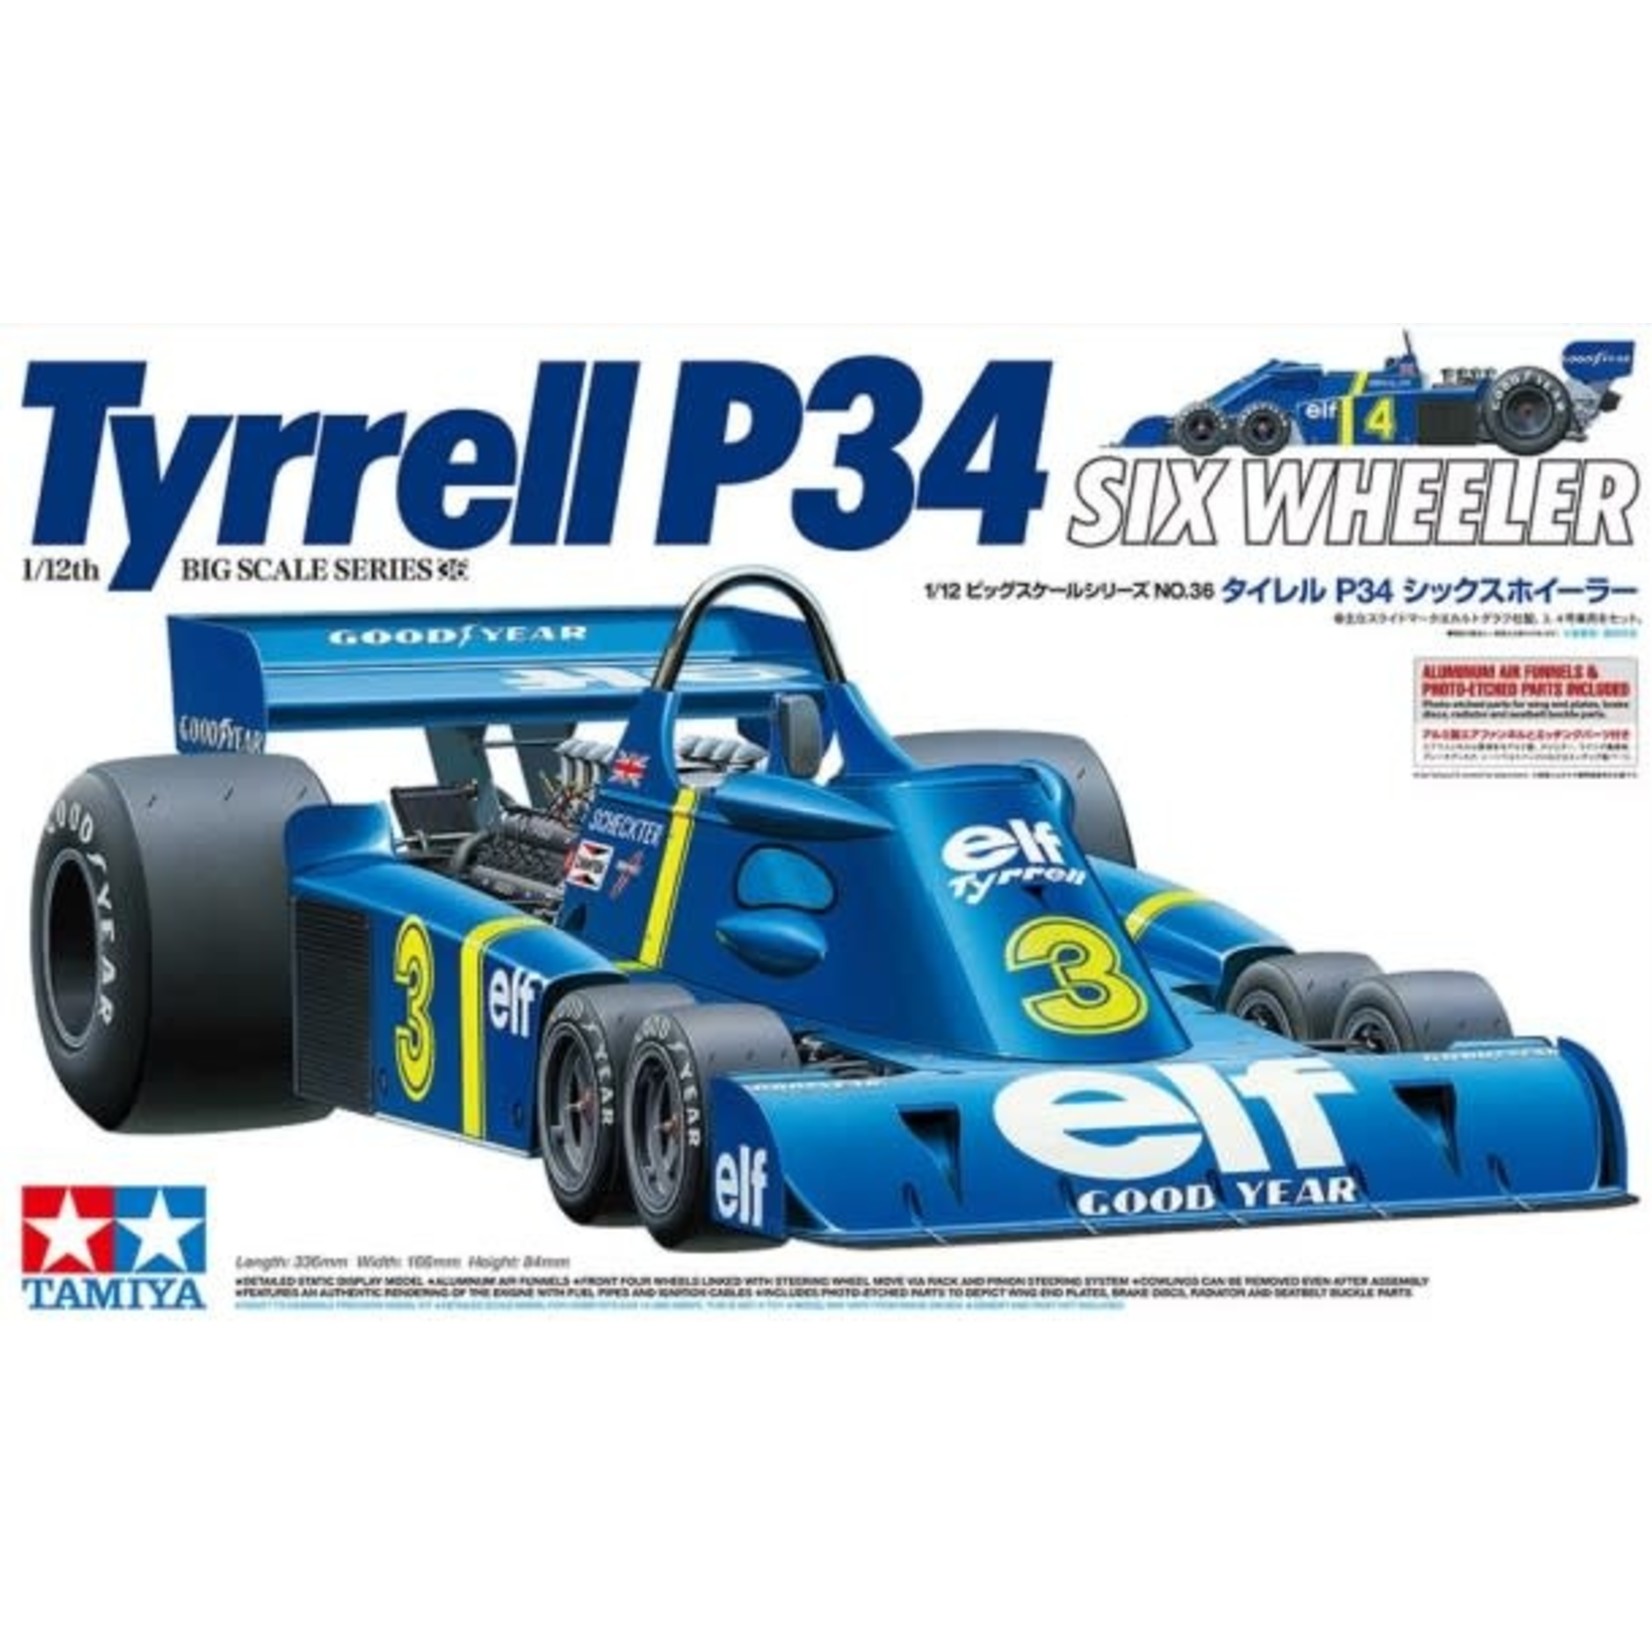 Tamiya 1/12 Tyrrell P34 Six Wheeler F1 GP Race Car